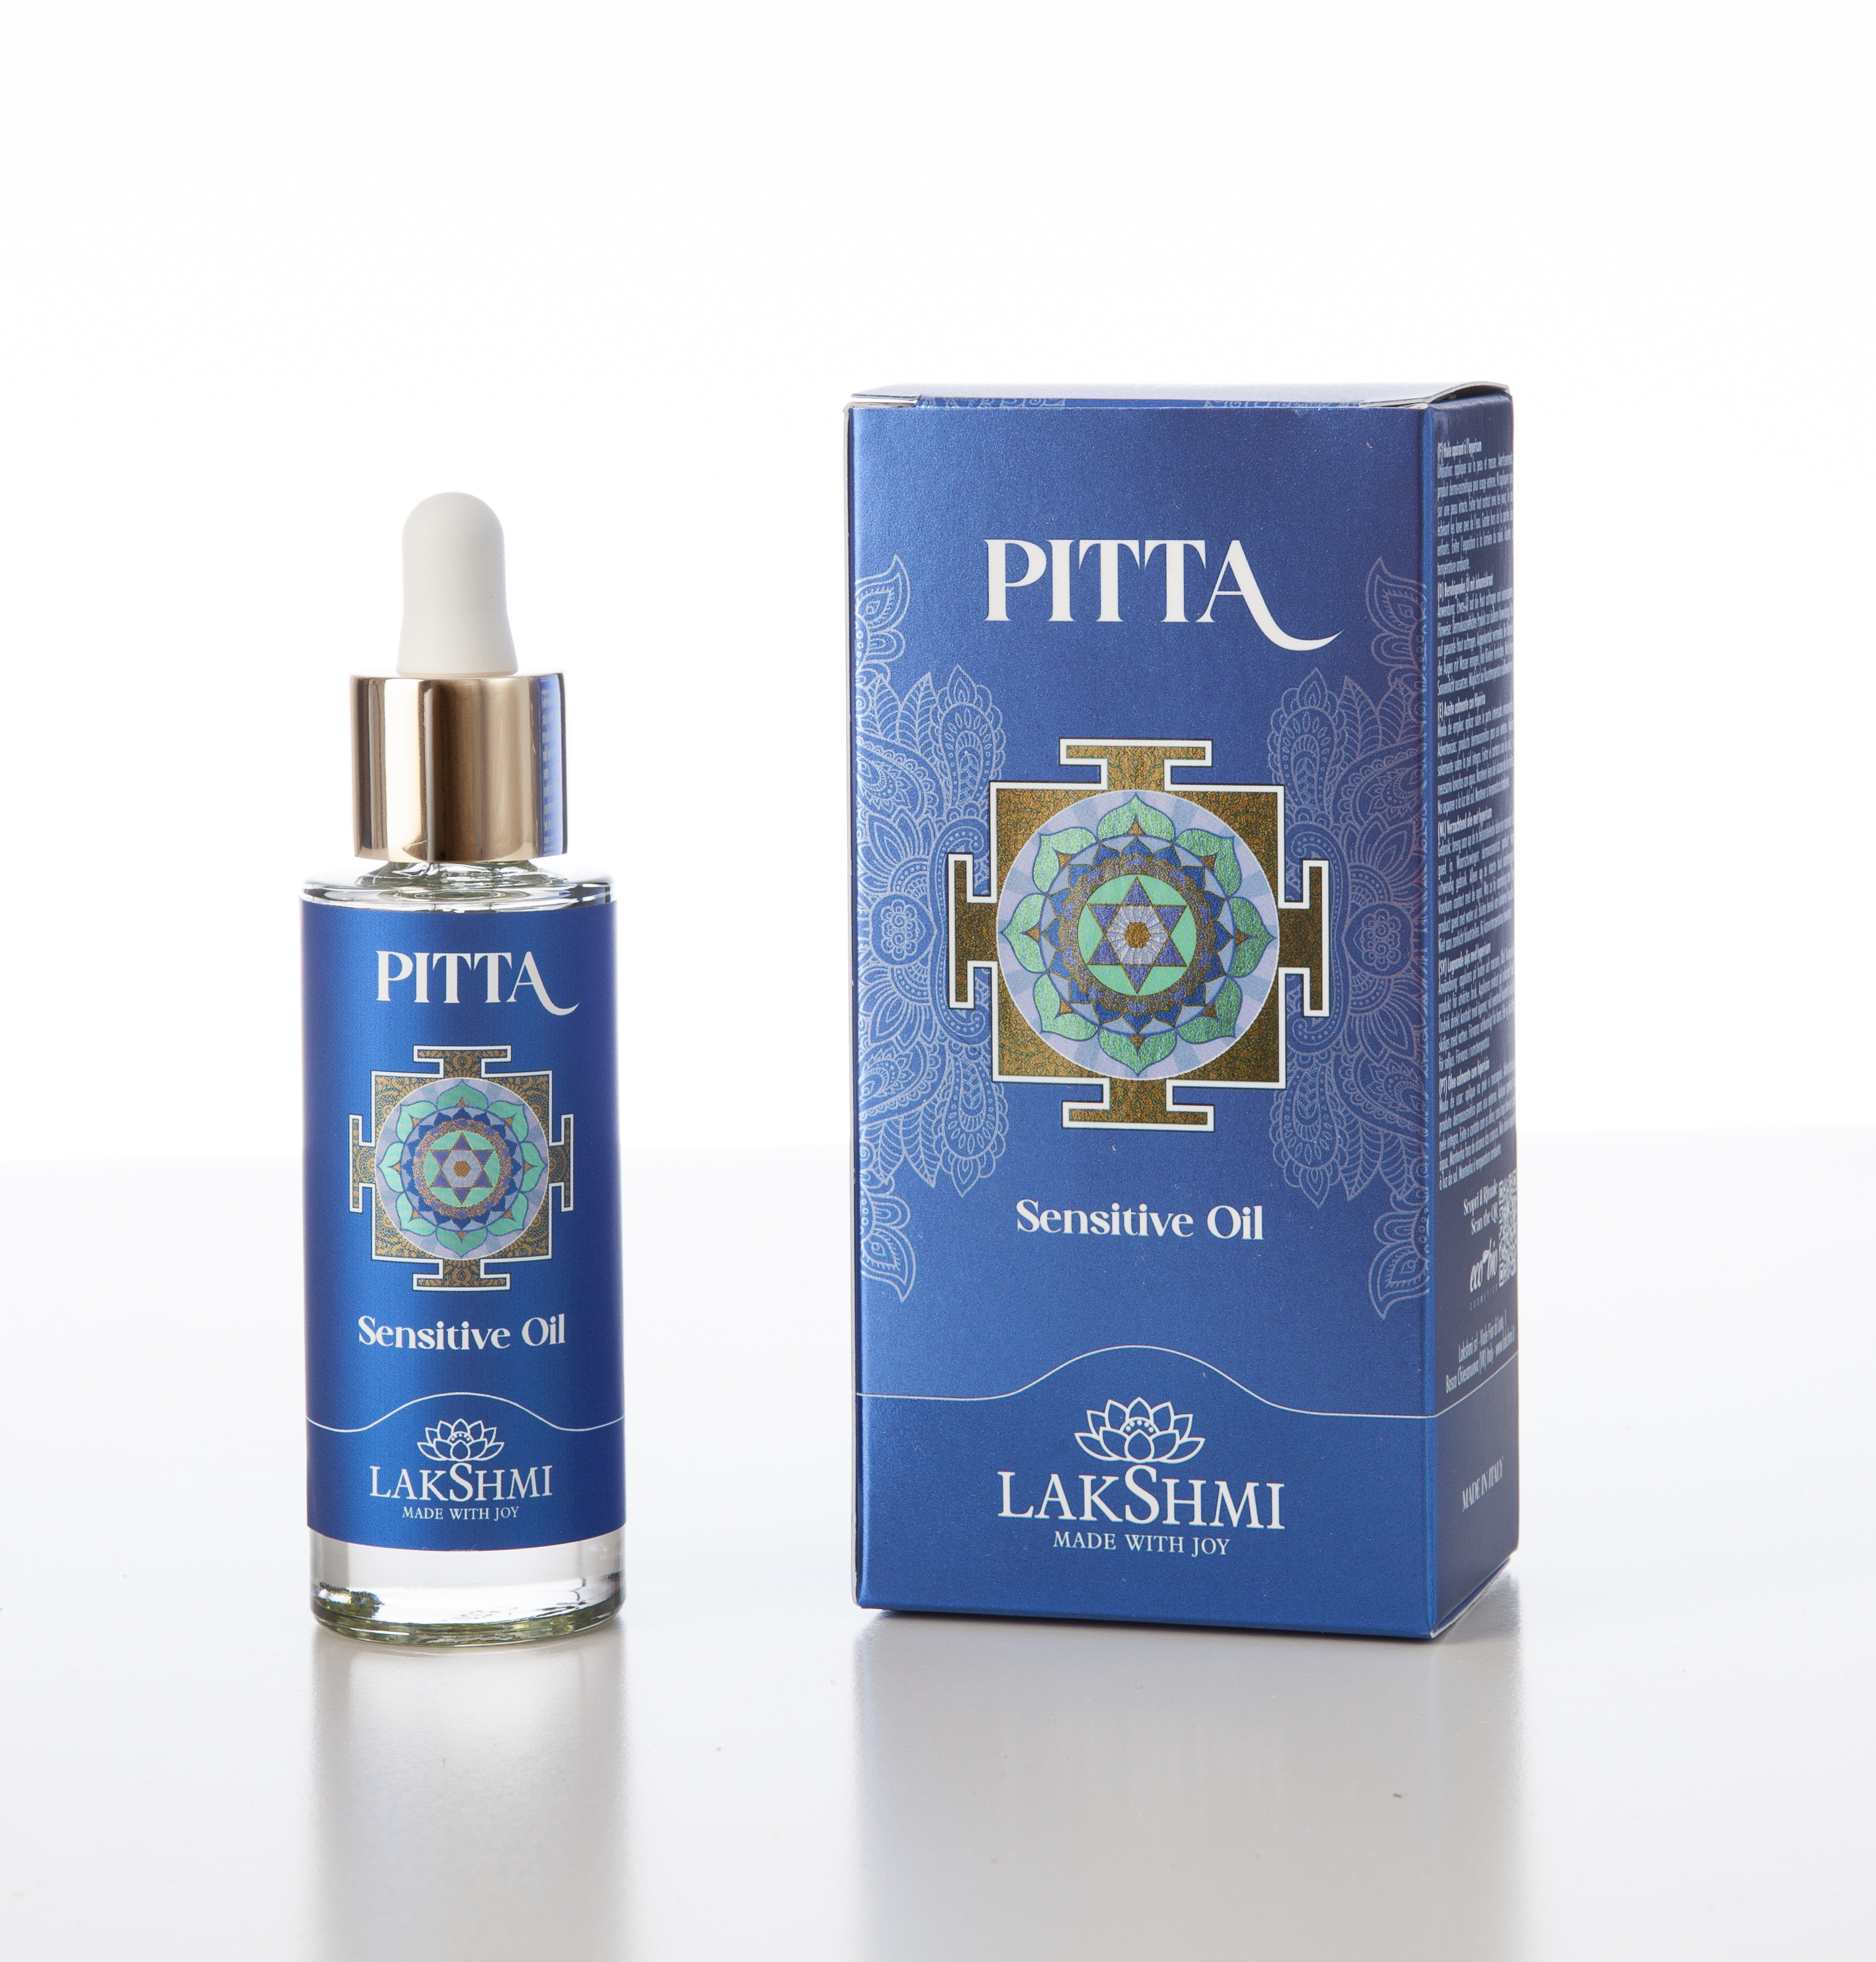 Pitta Sensitive Oil